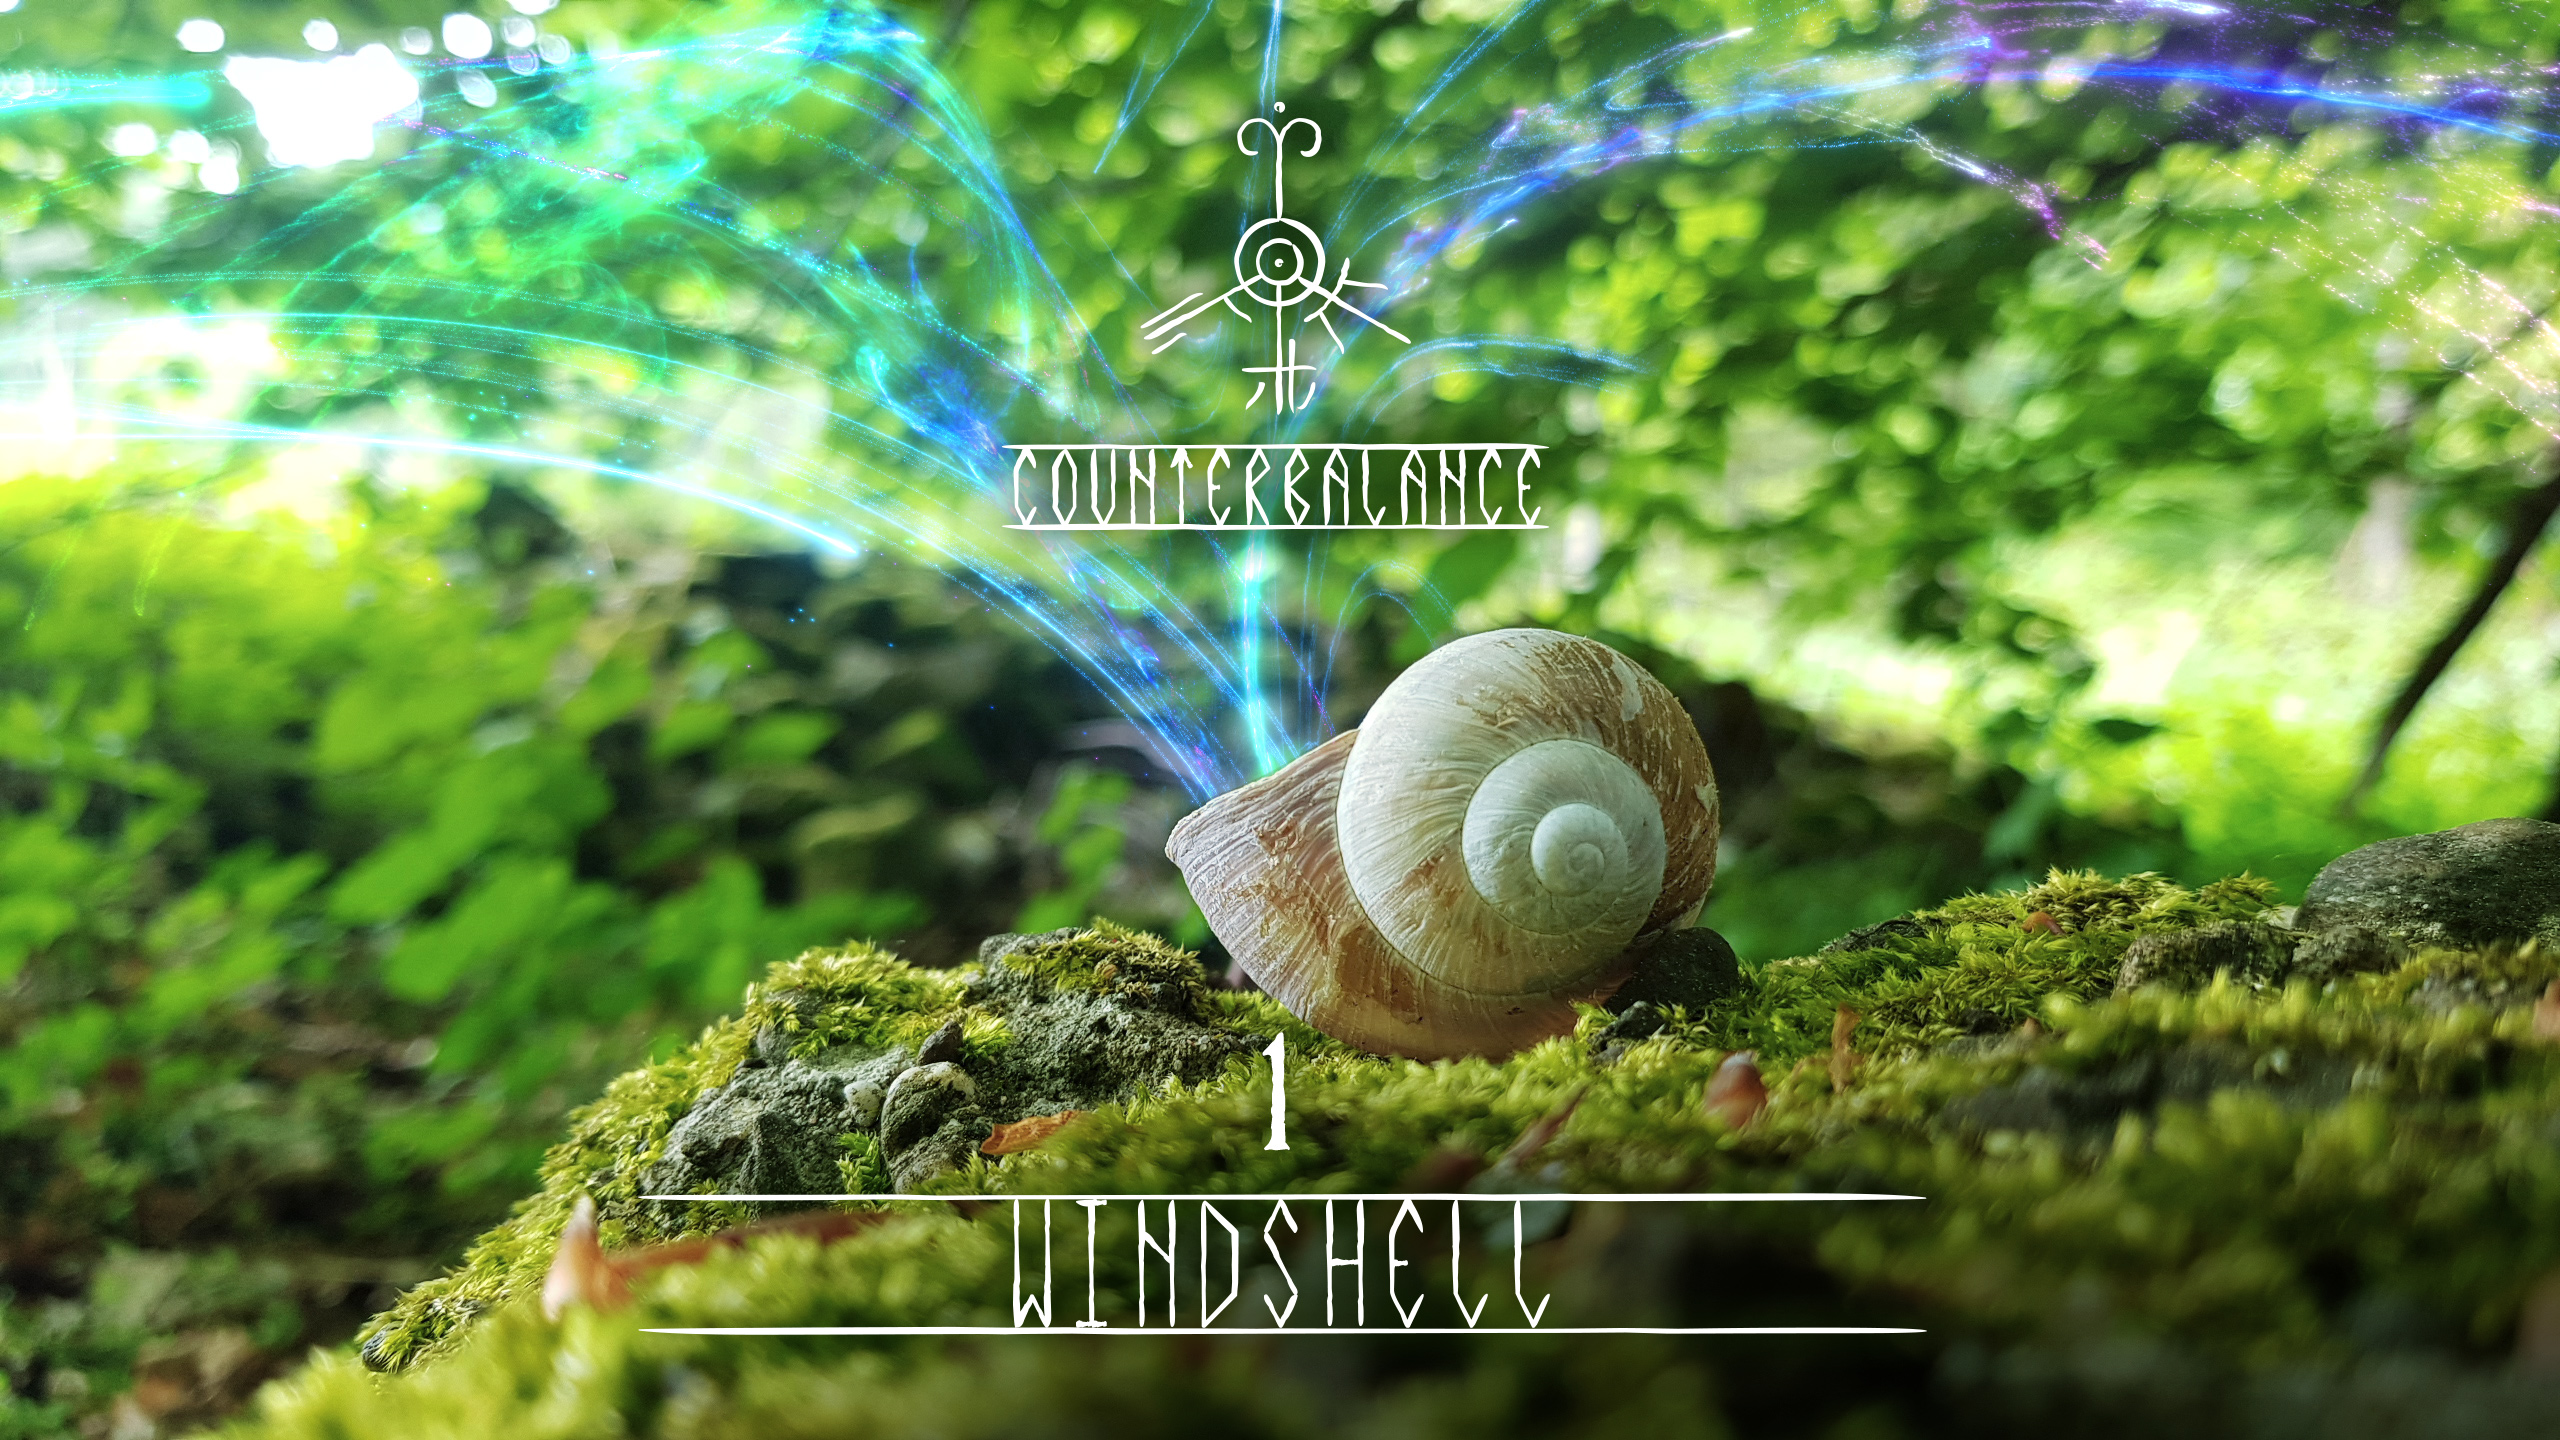 Counterbalance Cover Art Podcast Episode 01 Artwork Windshell